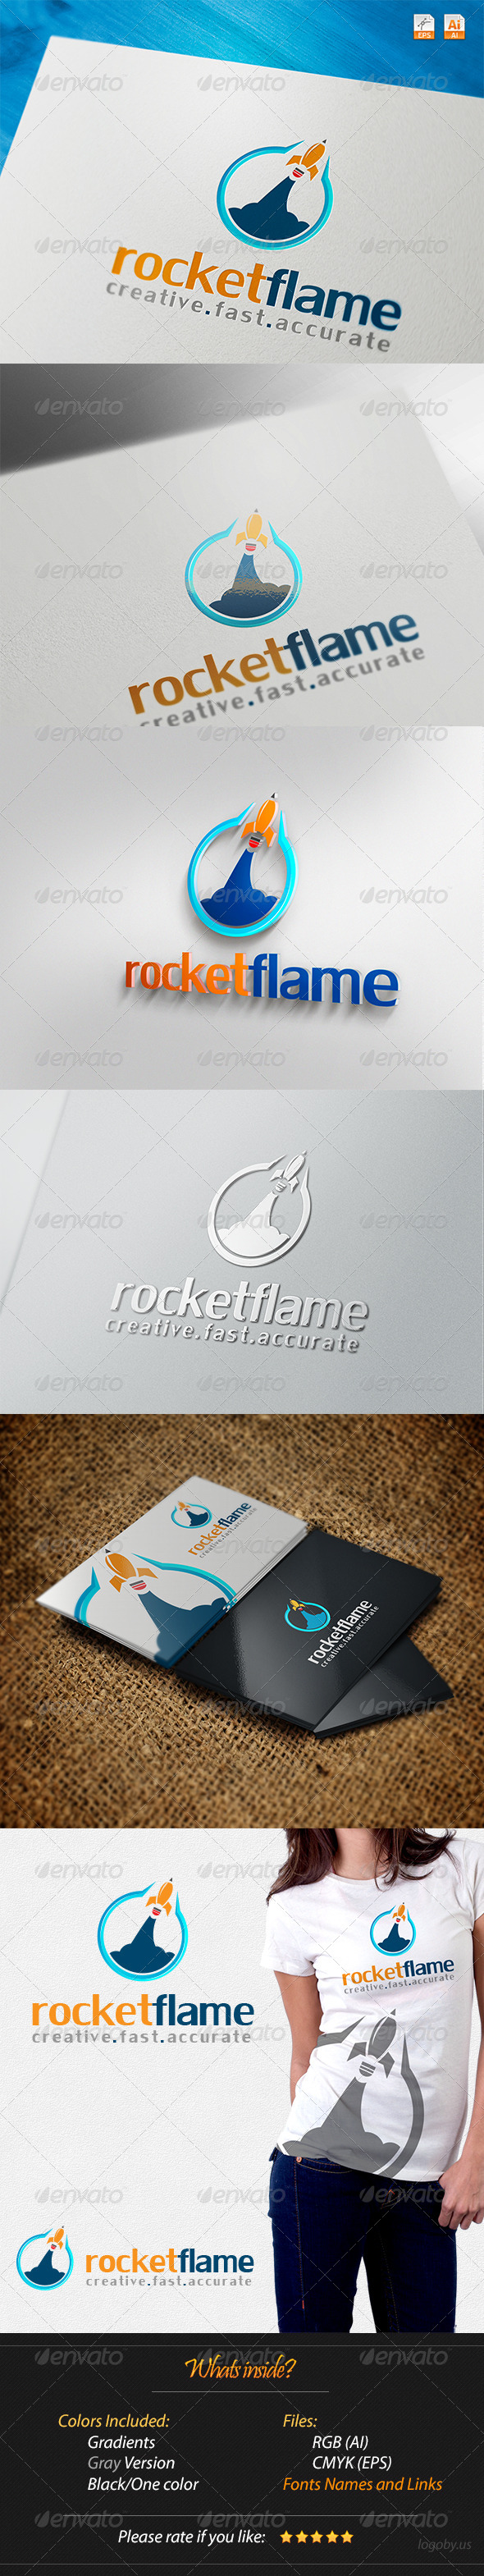 Rocket Flame Creative Fast Accurate Logo